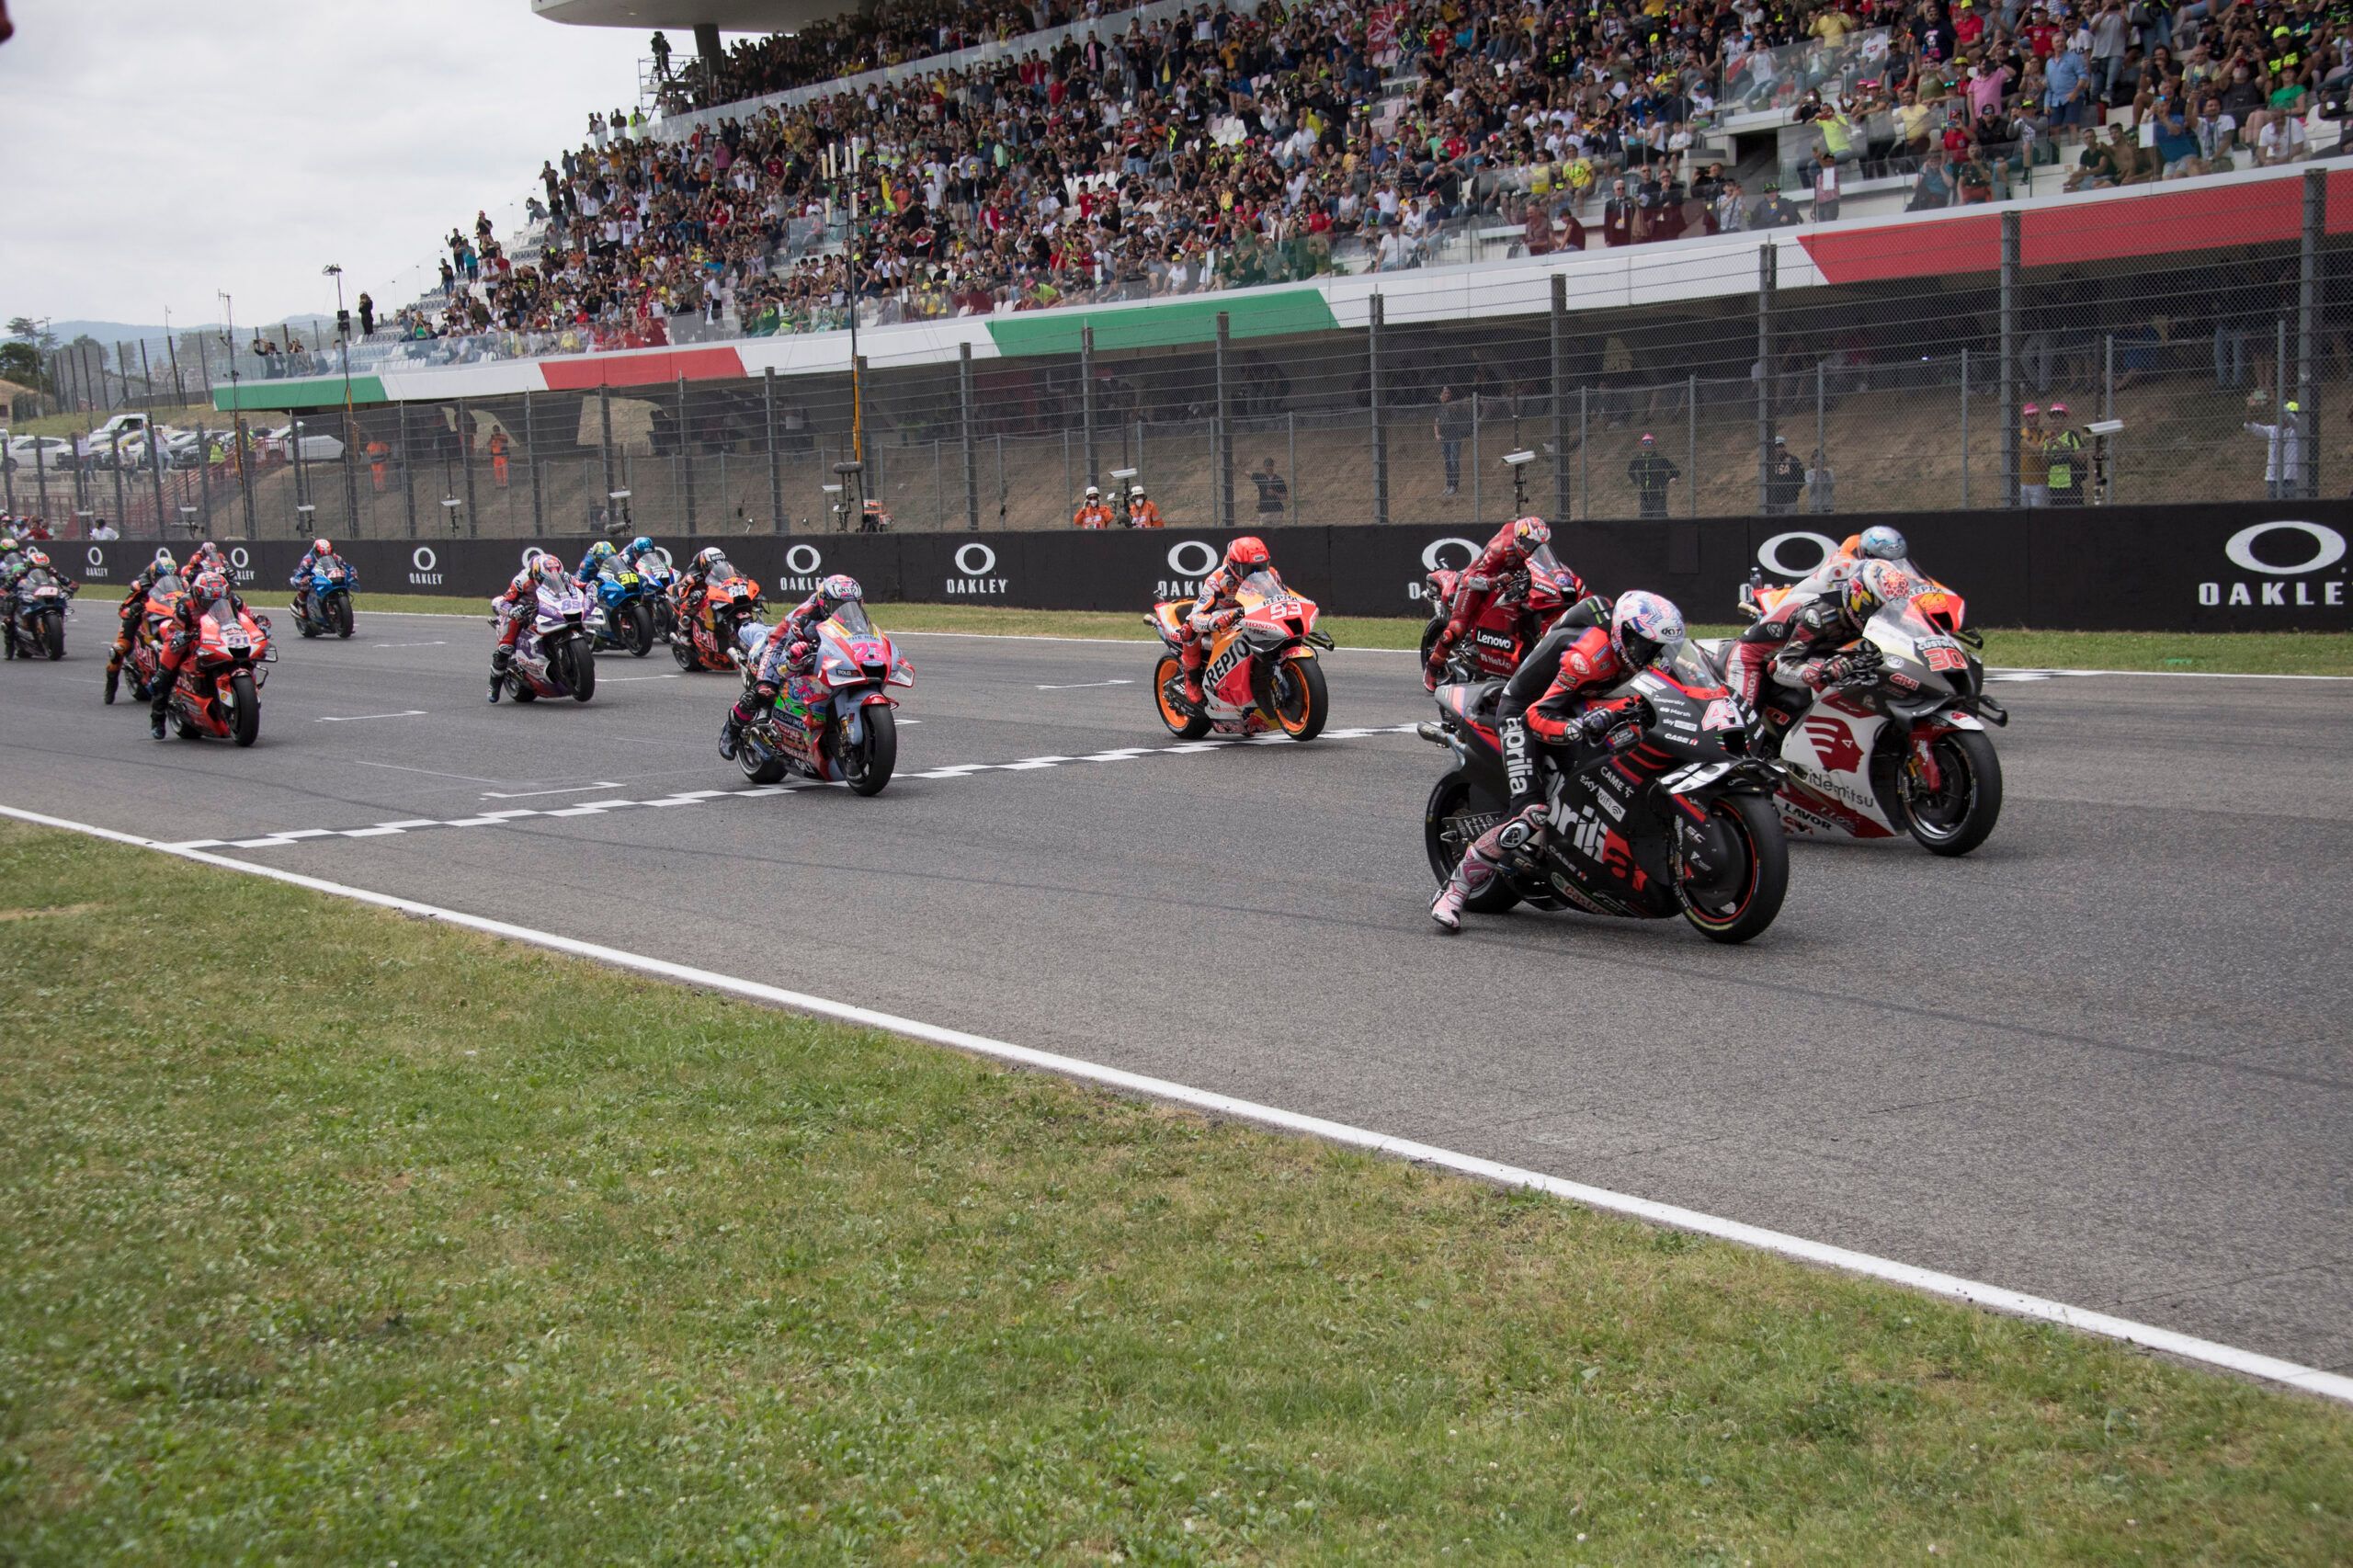 MotoGP BT Sport team give verdicts as sprint races arrive for 2023